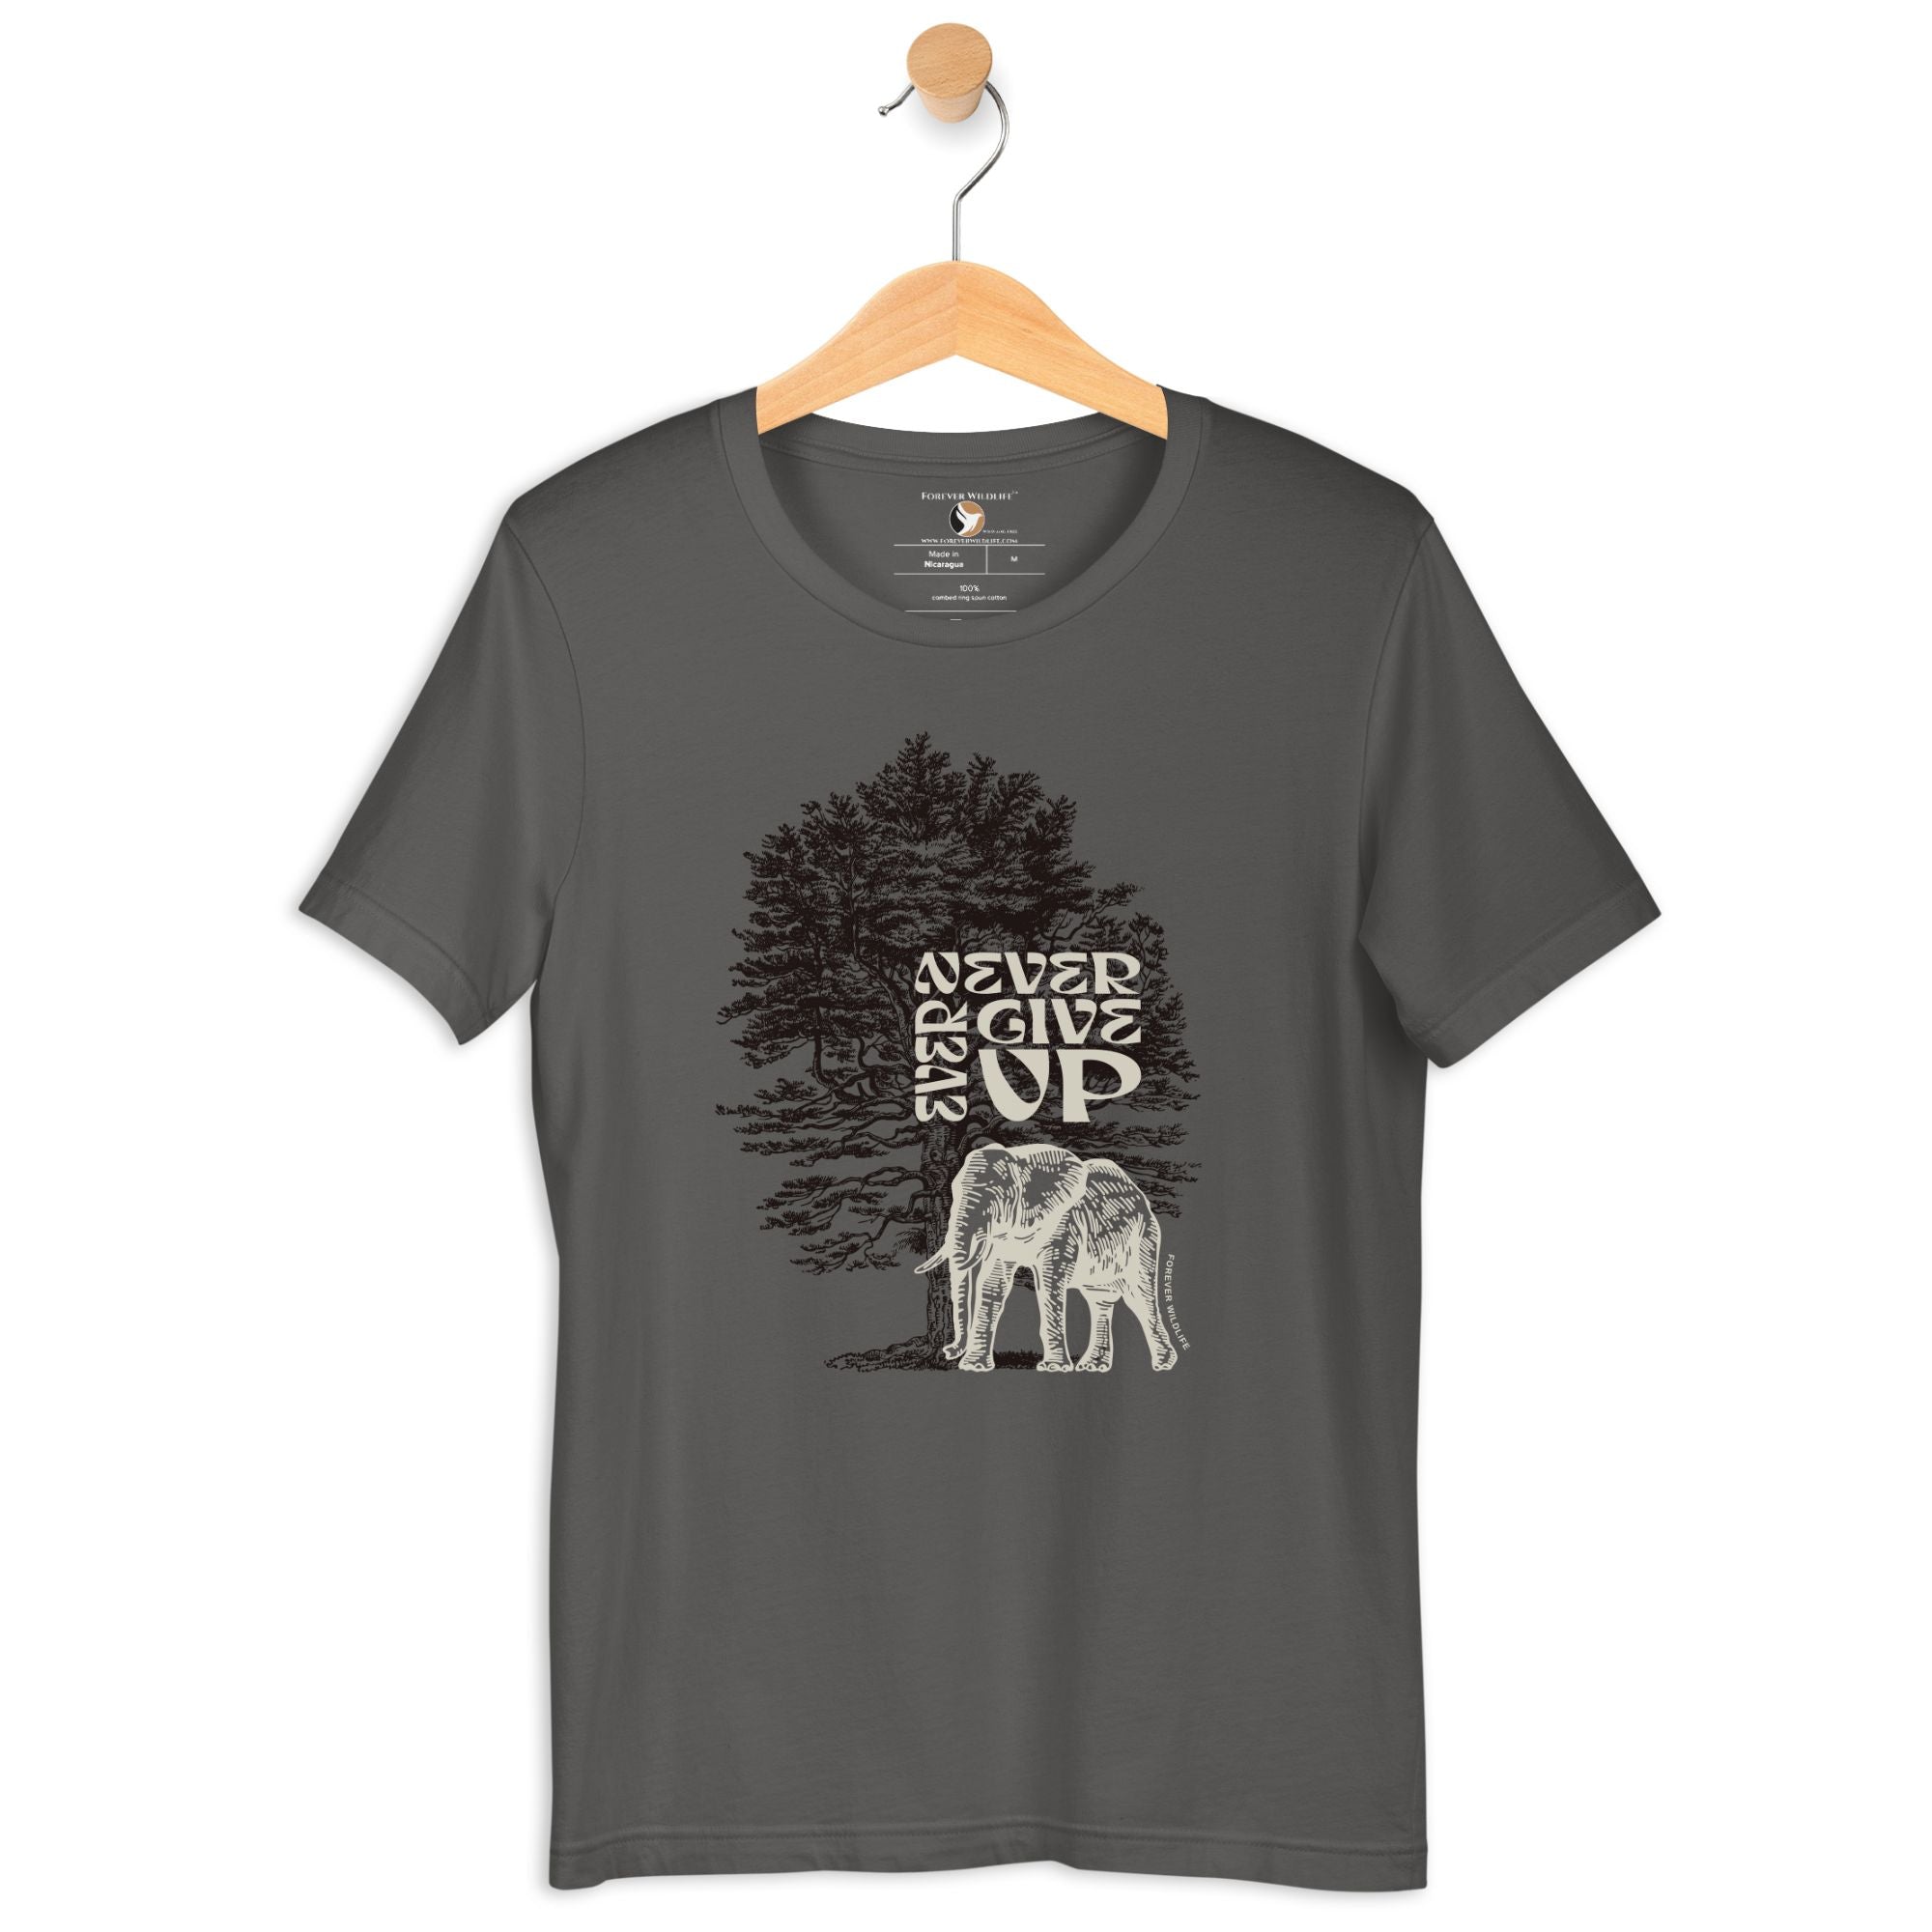 Elephant T-Shirt in Asphalt – Premium Wildlife T-Shirt Design with Never Ever Give Up text, Elephant Shirts & Wildlife Clothing